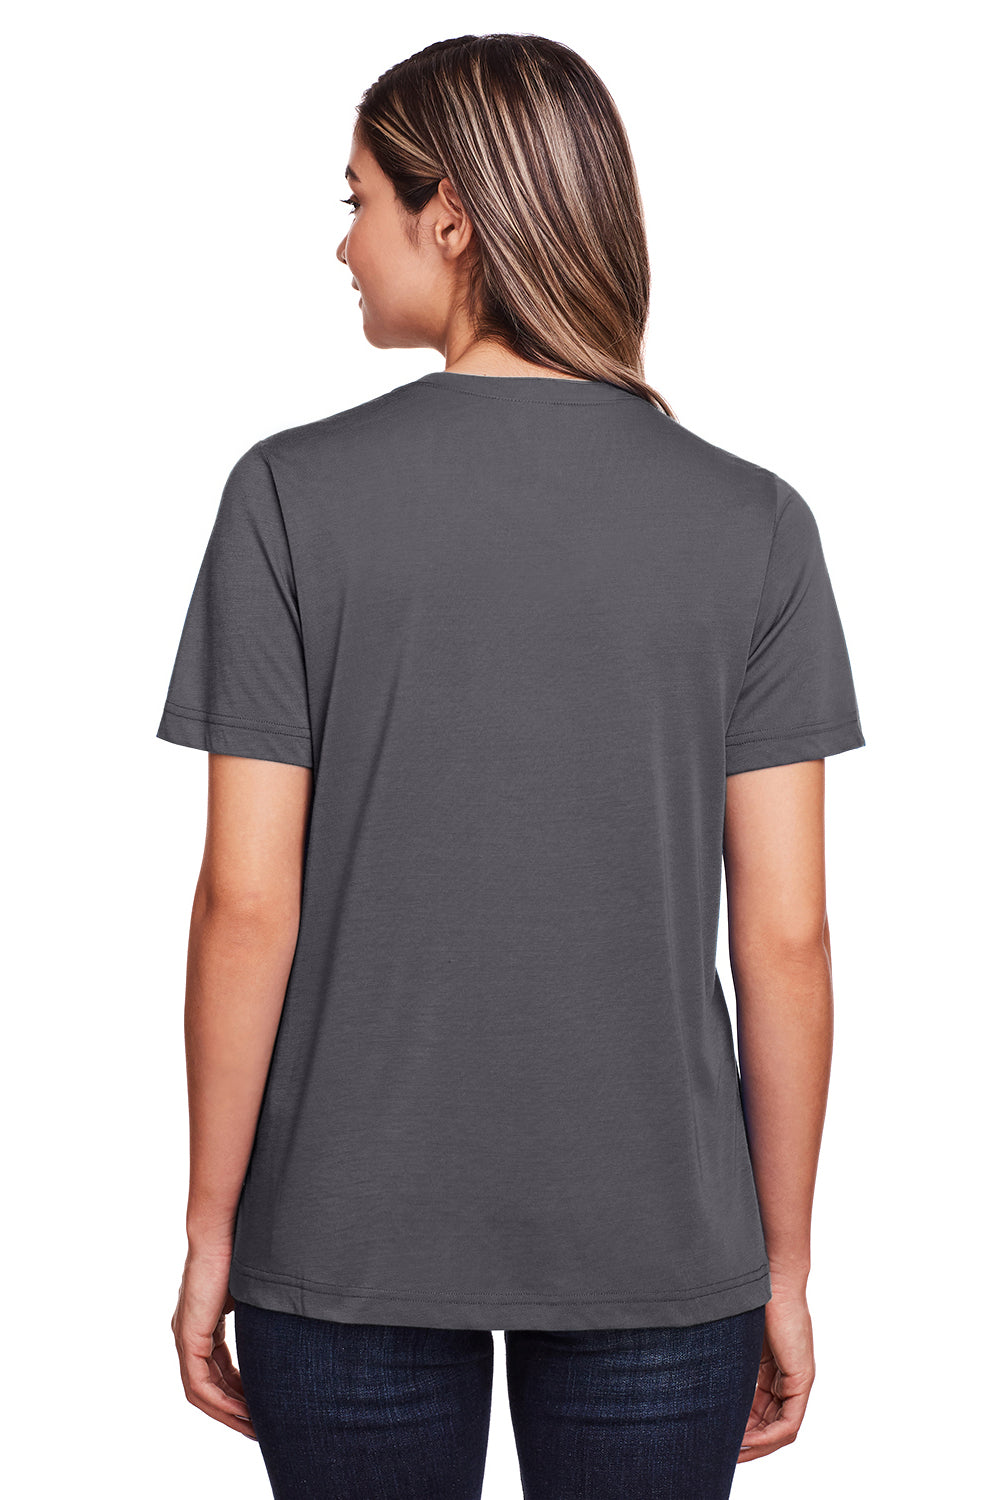 Core 365 CE111W Womens Fusion ChromaSoft Performance Moisture Wicking Short Sleeve Scoop Neck T-Shirt Carbon Grey Back